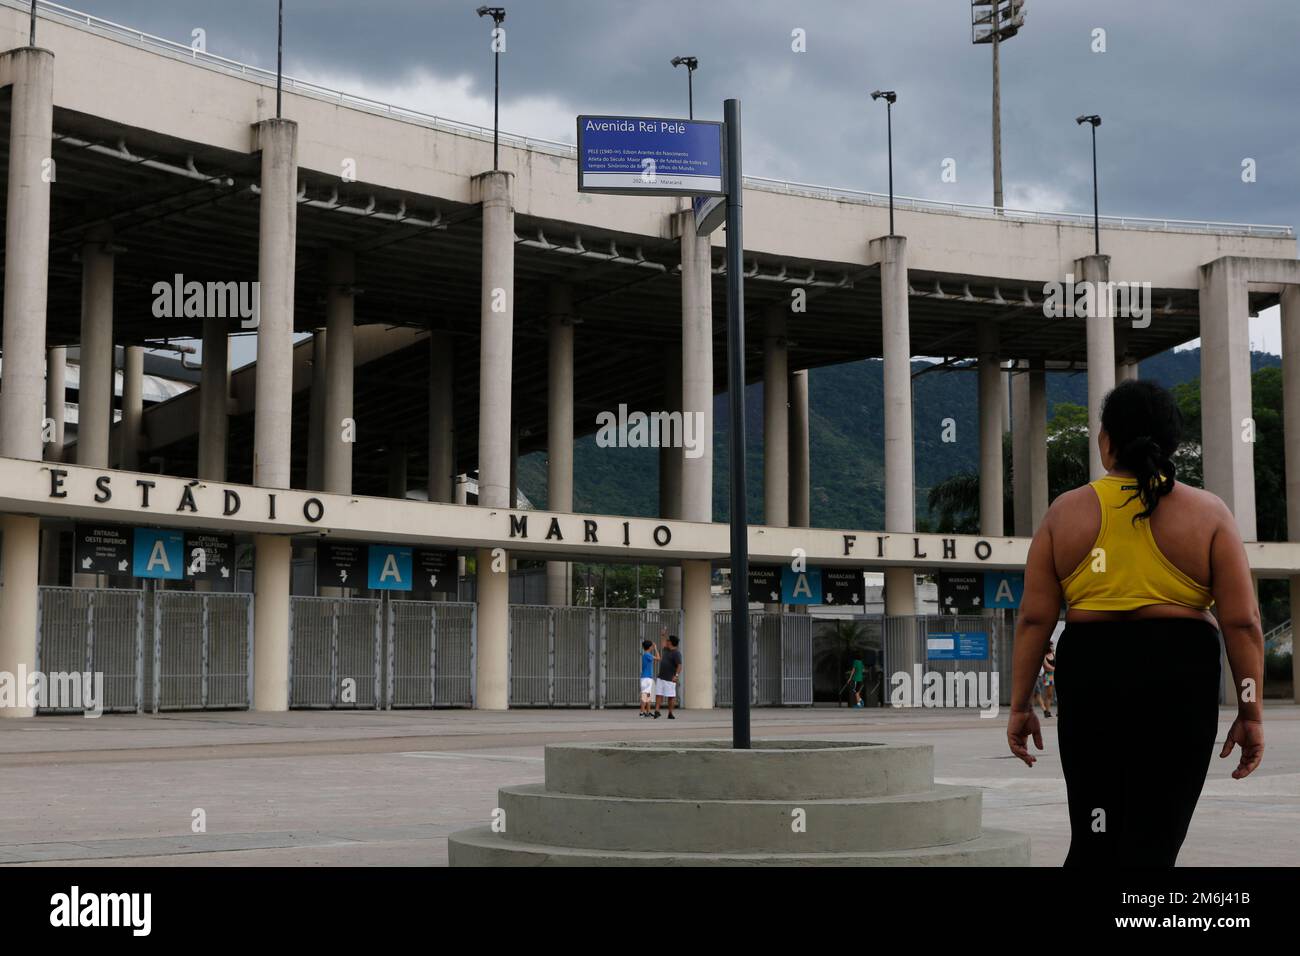 Avenue King Pelé allo stadio Macaranã, cartello stradale. Omaggio al famoso giocatore brasiliano di calcio Pele, Edson Arantes do Nascimento - Rio de Janeiro Brasile Foto Stock